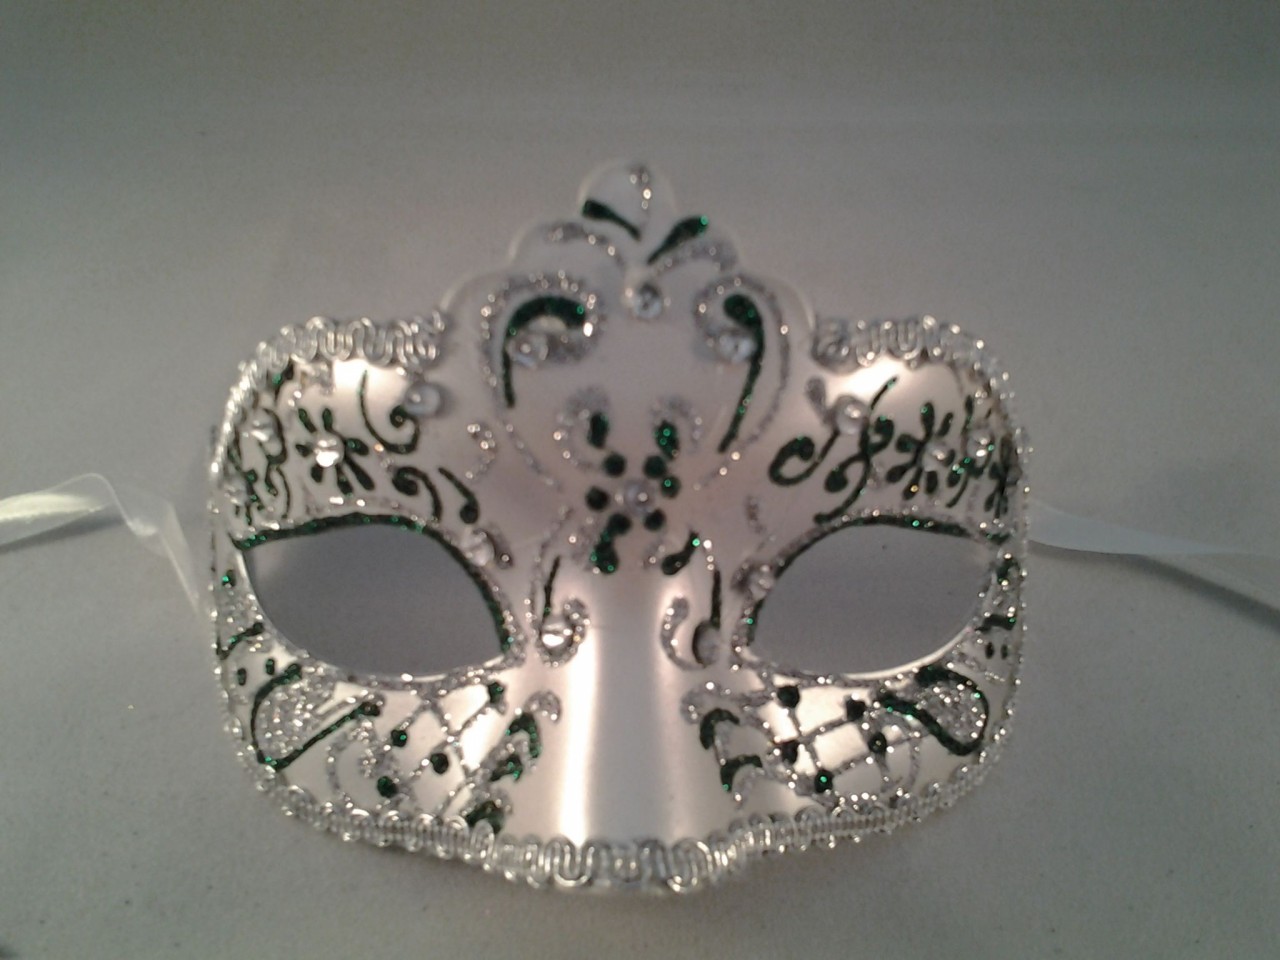 Silver and Green Masquerade Mask